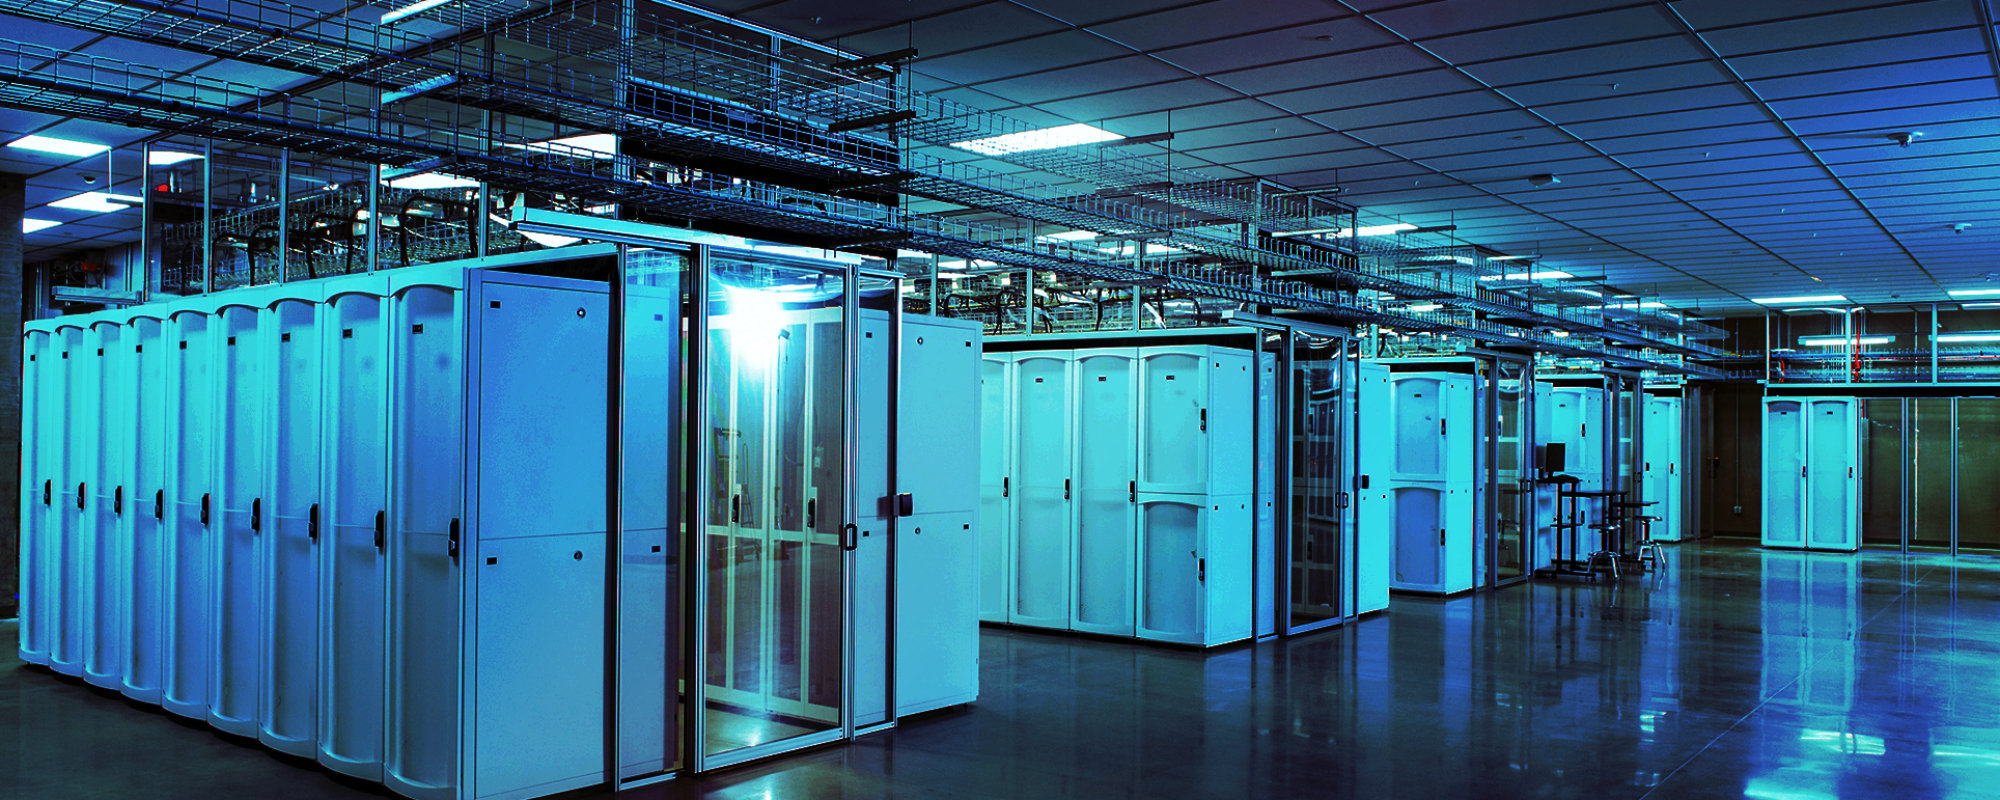 More information about "H χρυσή εποχή των data centers μέσω πανδημίας"